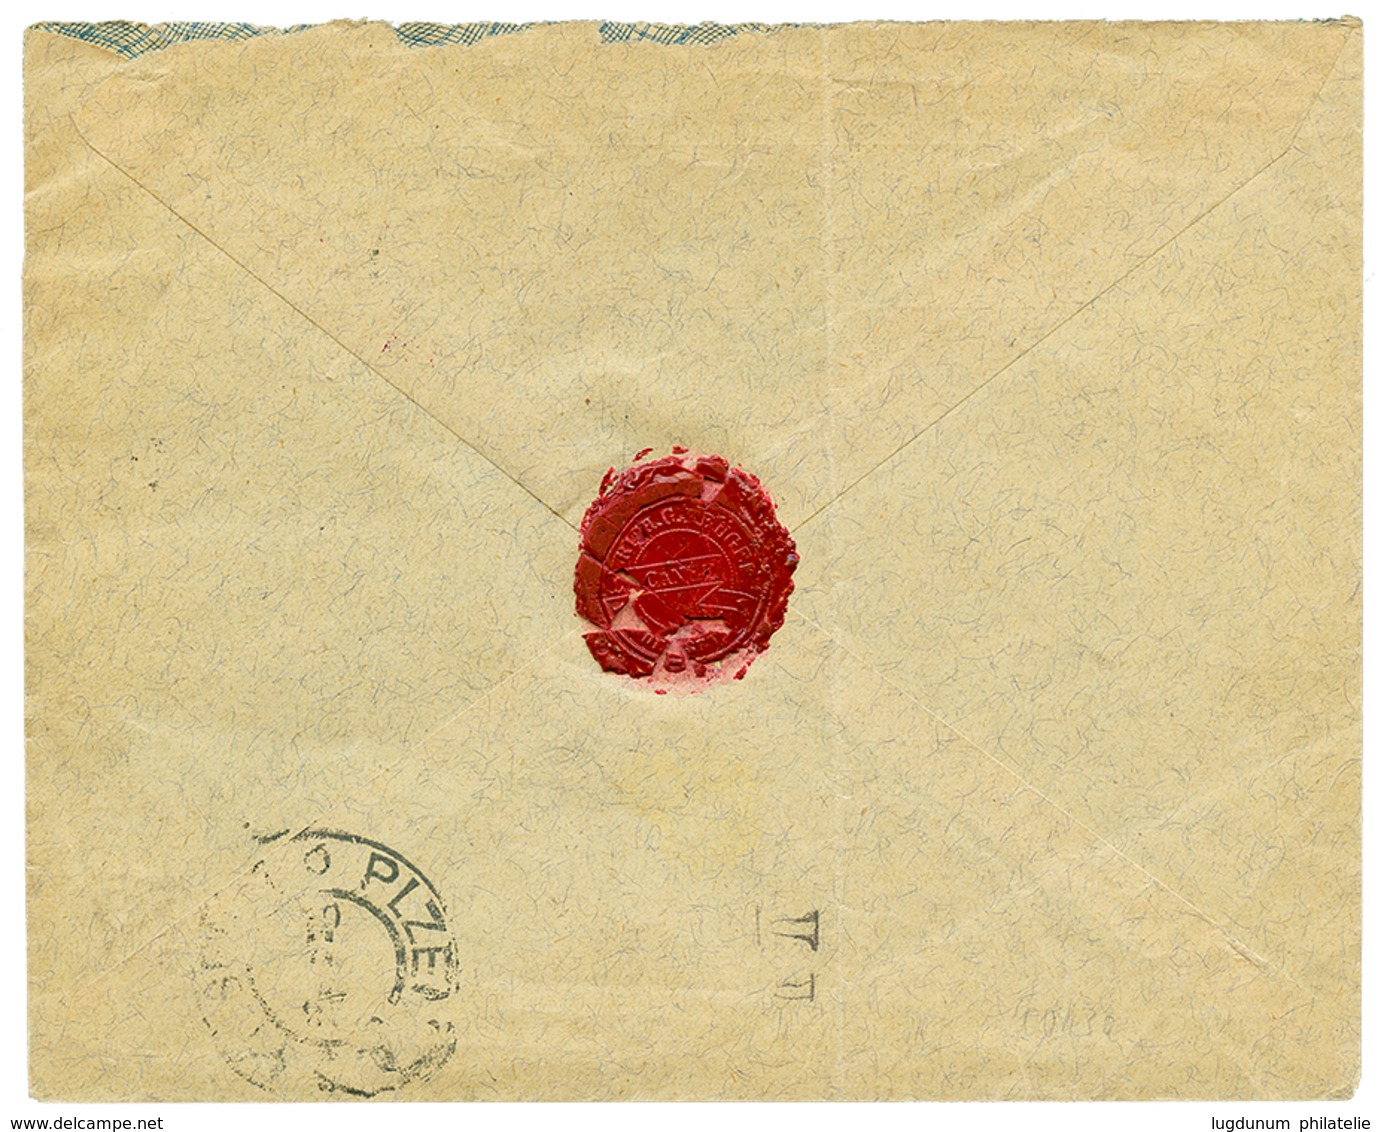 472 1904 25c(x2) Canc. I.R SPEDIZIONE POSTALE CANEA On REGISTERED Envelope To PILSEN(BOHEMIA). Vvf. - Eastern Austria